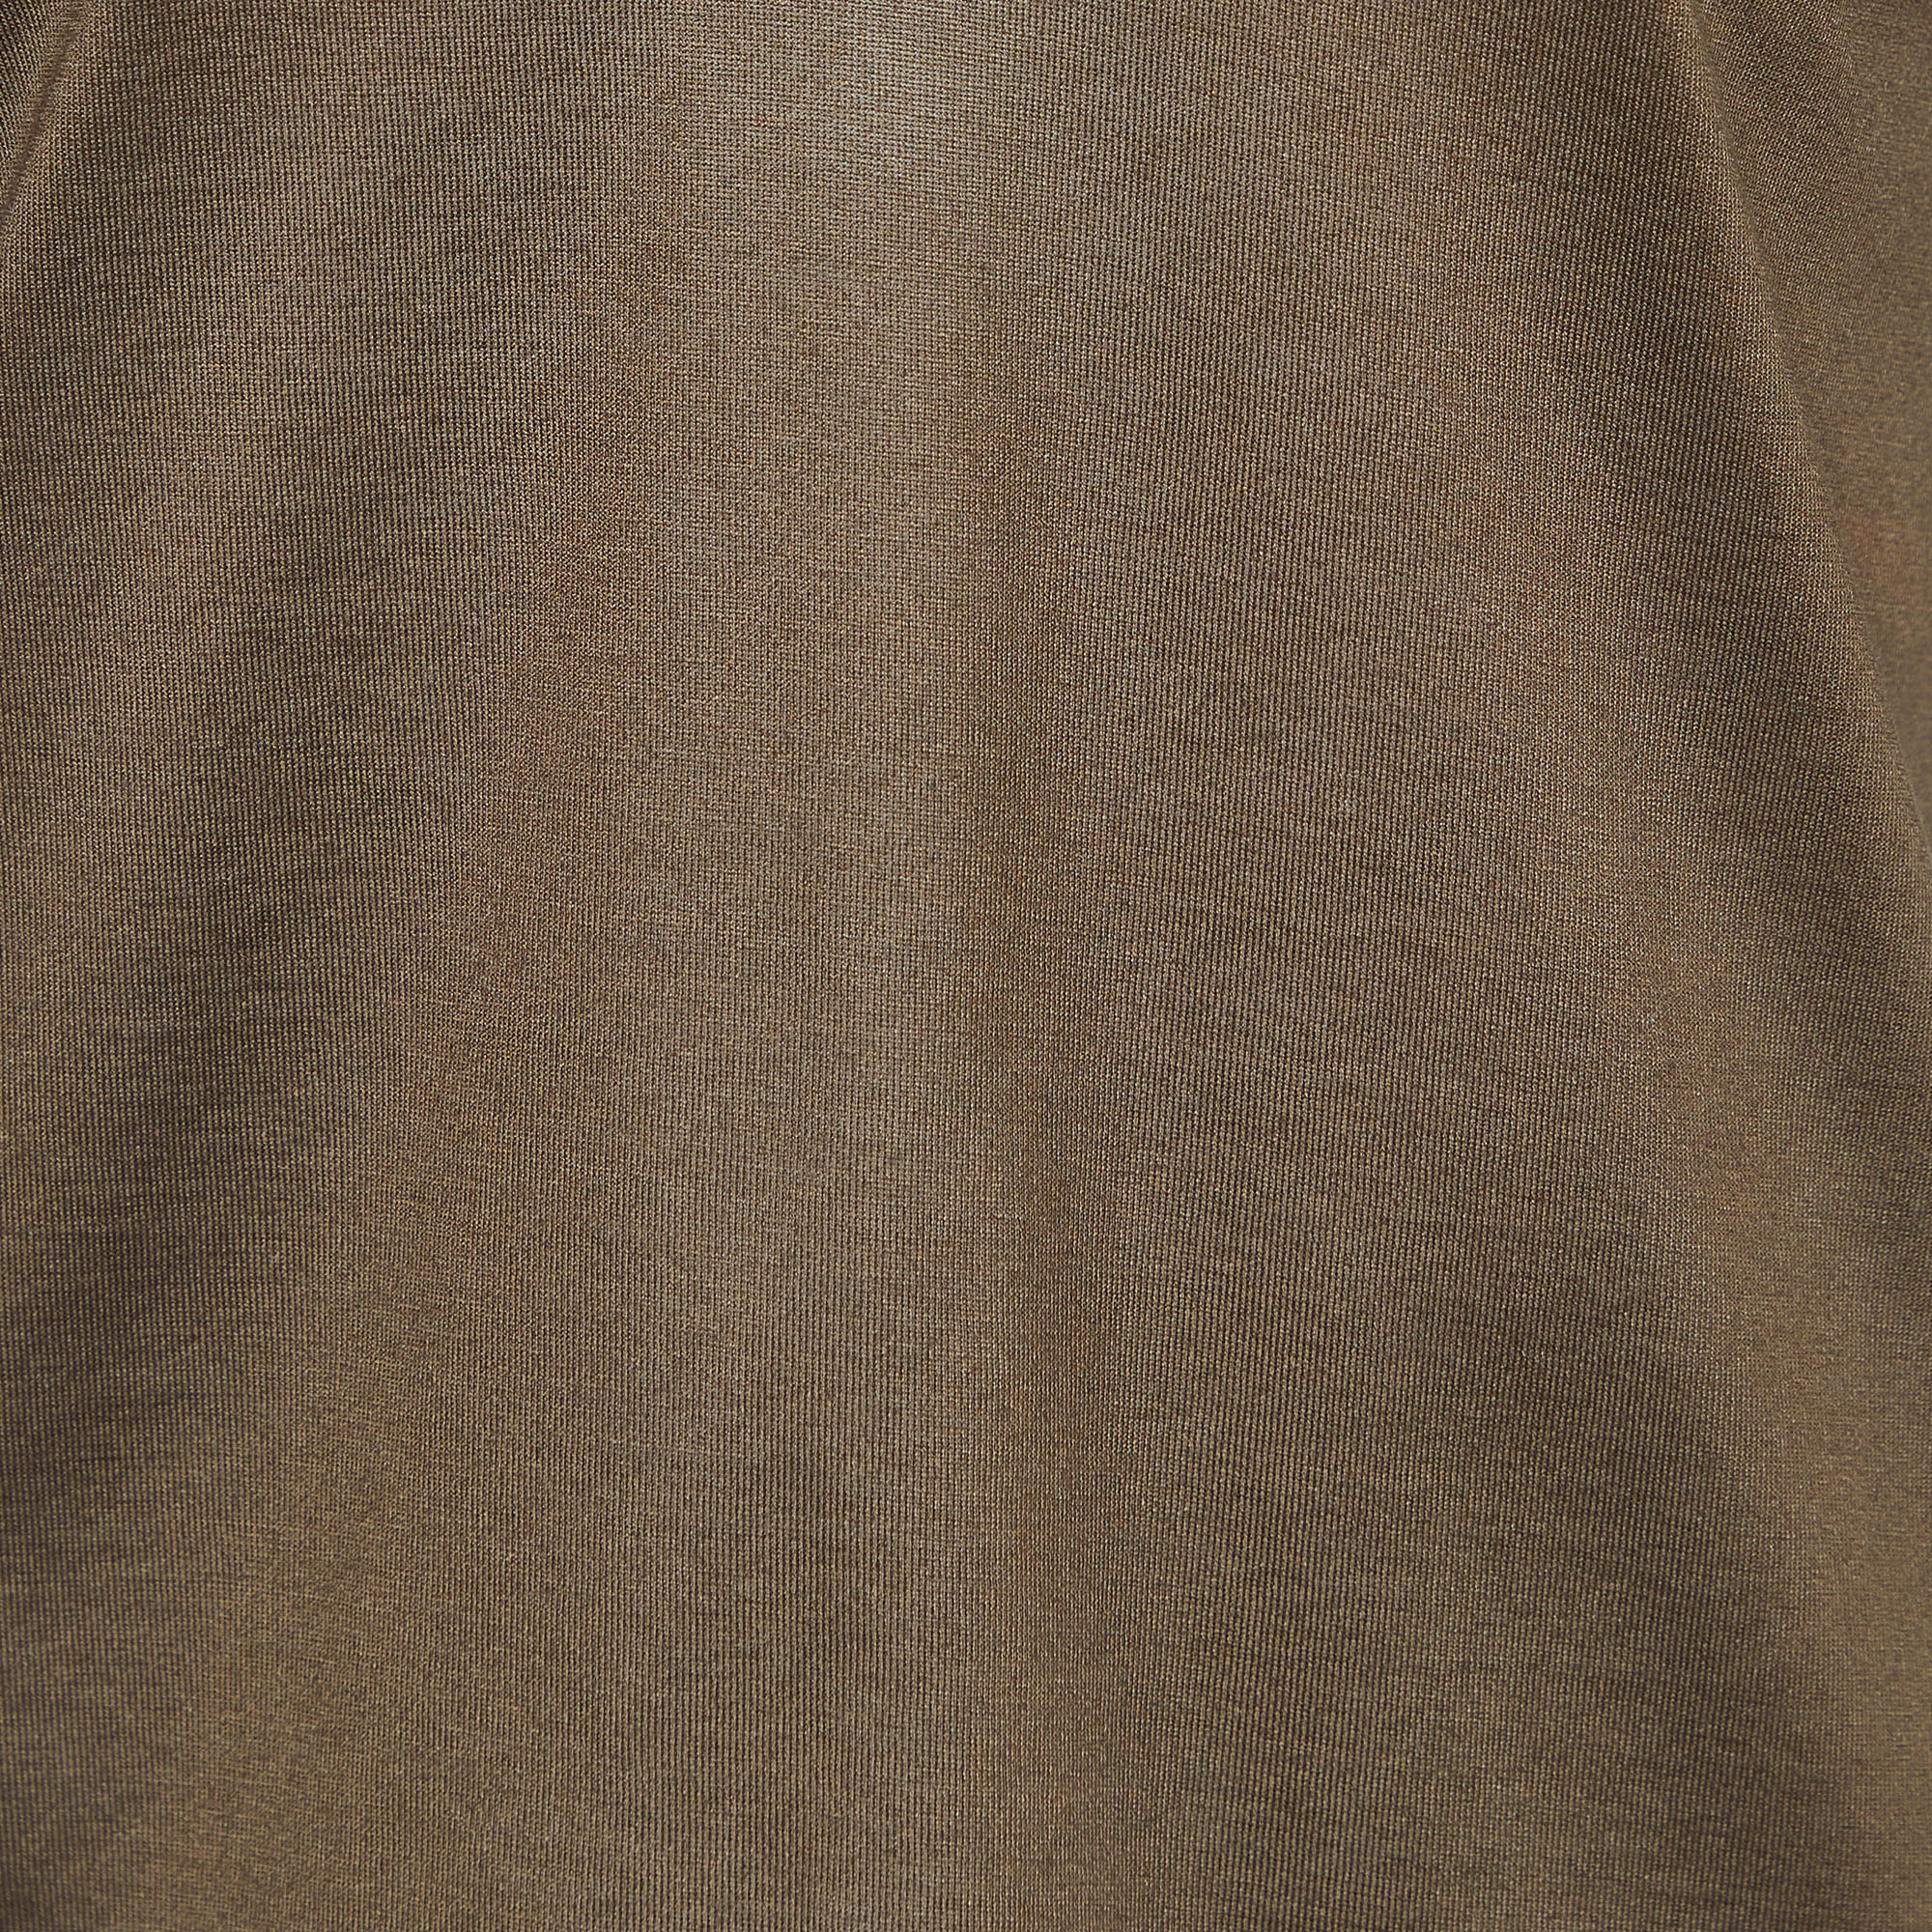 Prada Brown Cotton Knit V-Neck T-Shirt L